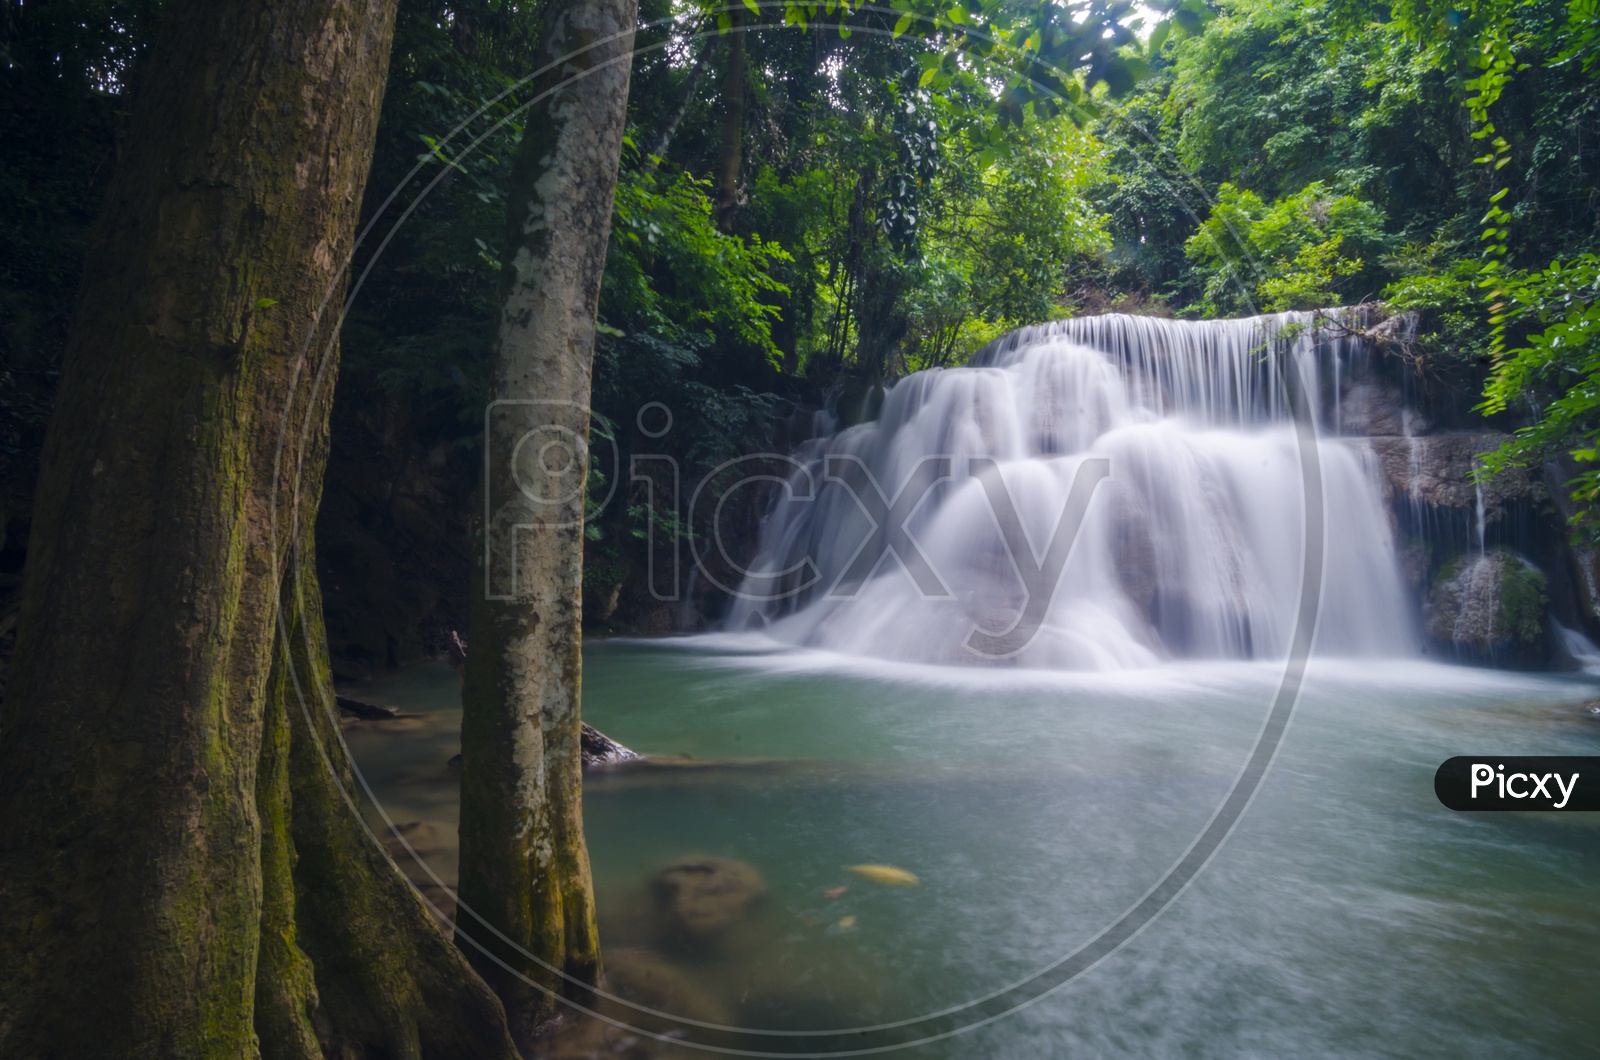 View of Erawan Waterfall in deep forest, Erawan National Park in Kanchanaburi, Thailand